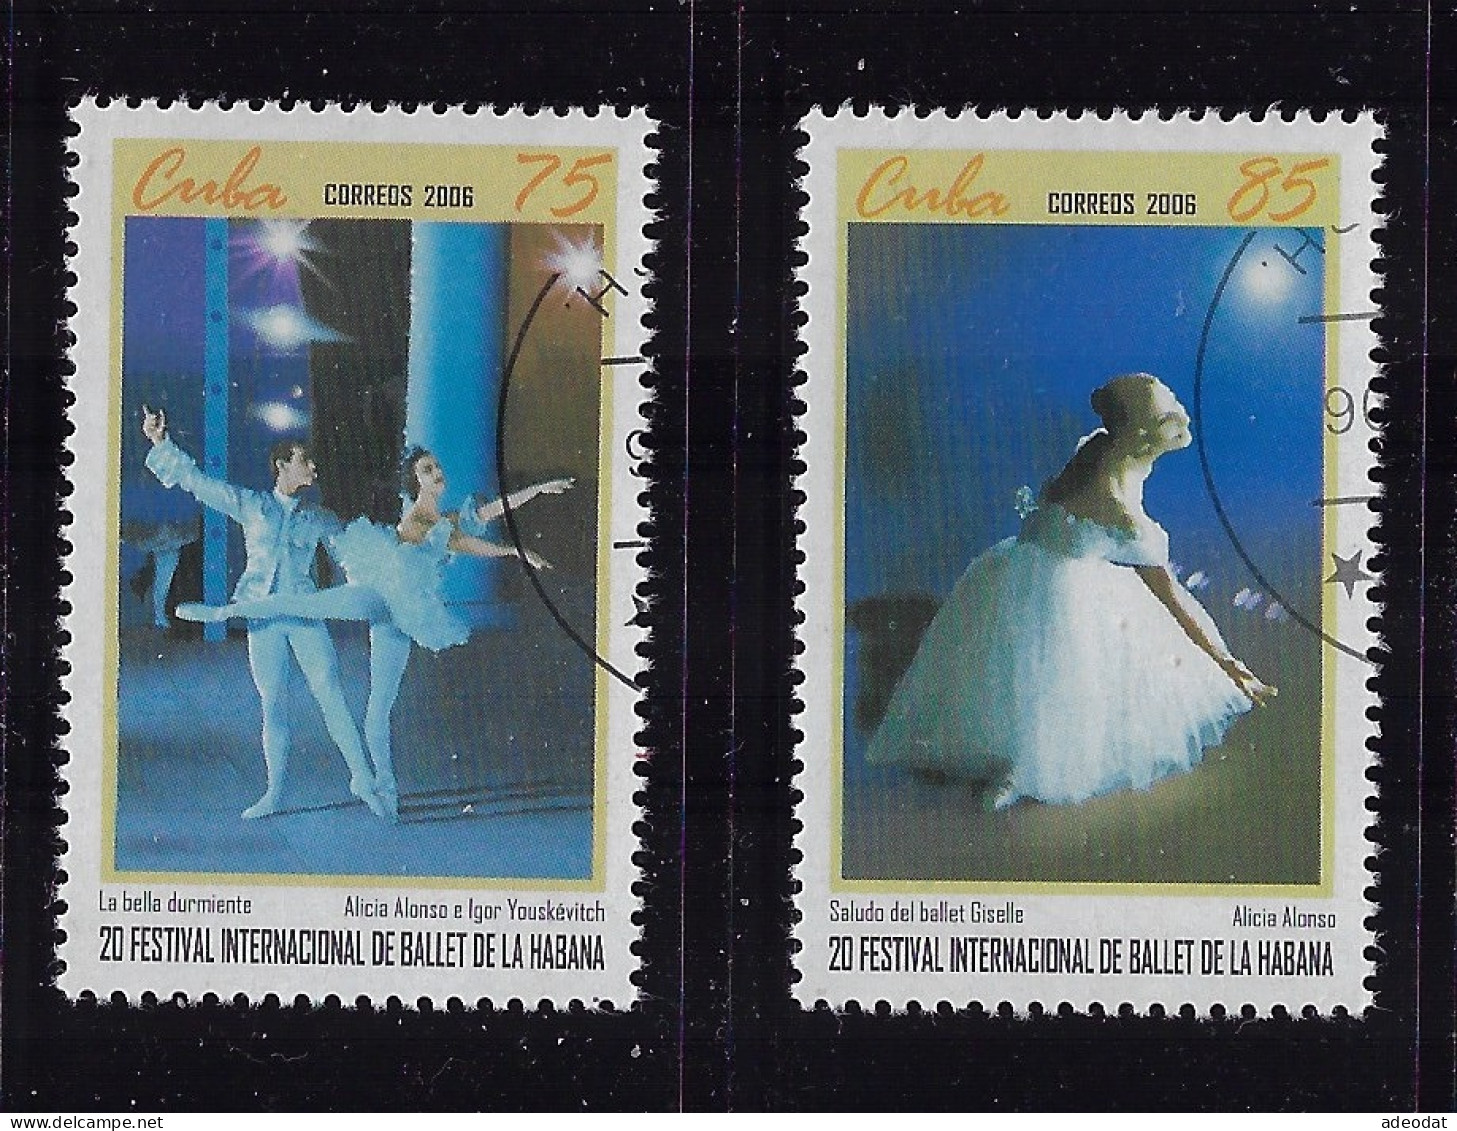 CUBA 2006 SCOTT 4631,4632 HAVANA BALLET FESTIVAL CANCELLED - Used Stamps